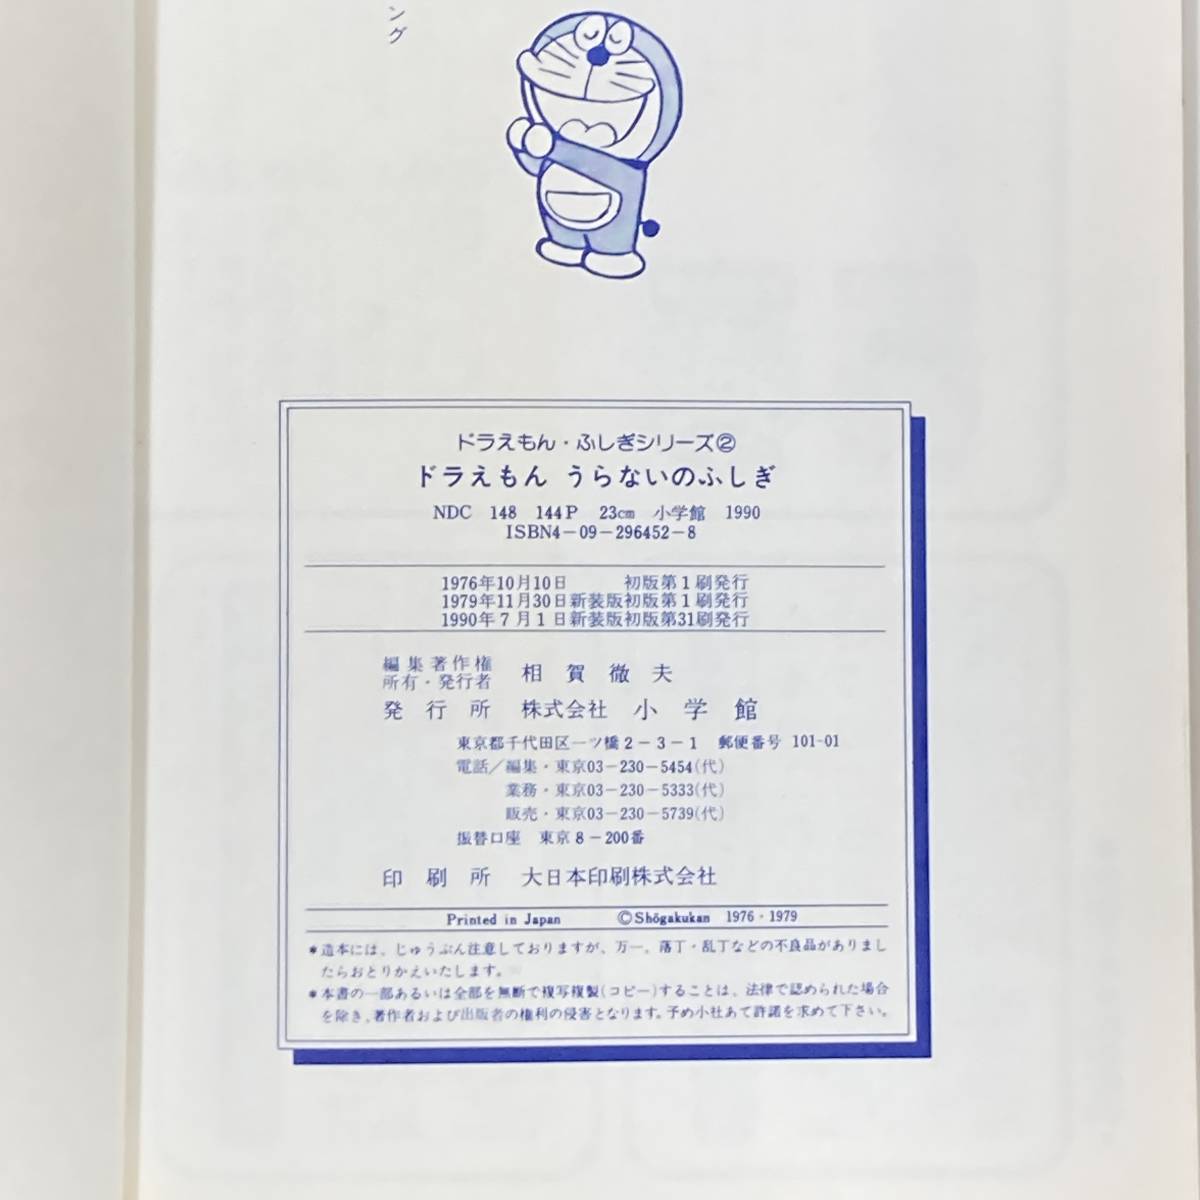 Q 9962 ドラえもん ふしぎシリーズ うらないのふしぎ 小学館 1990年7月1日発行 Product Details Yahoo Auctions Japan Proxy Bidding And Shopping Service From Japan